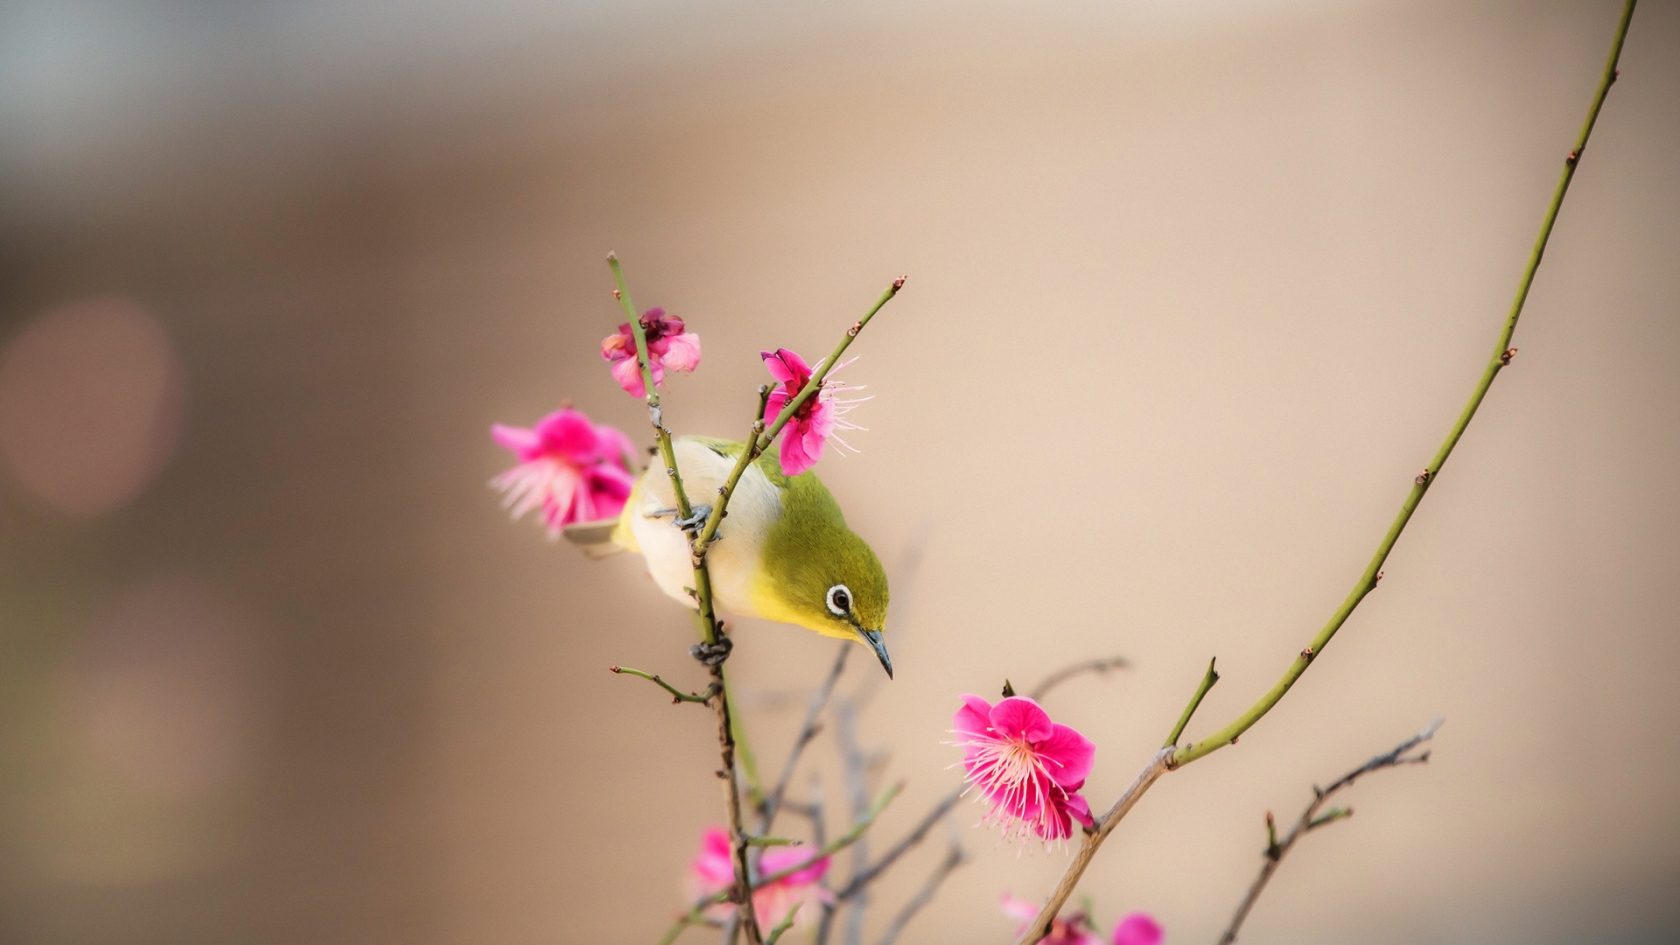 Little Bird on a Branch for 1680 x 945 HDTV resolution